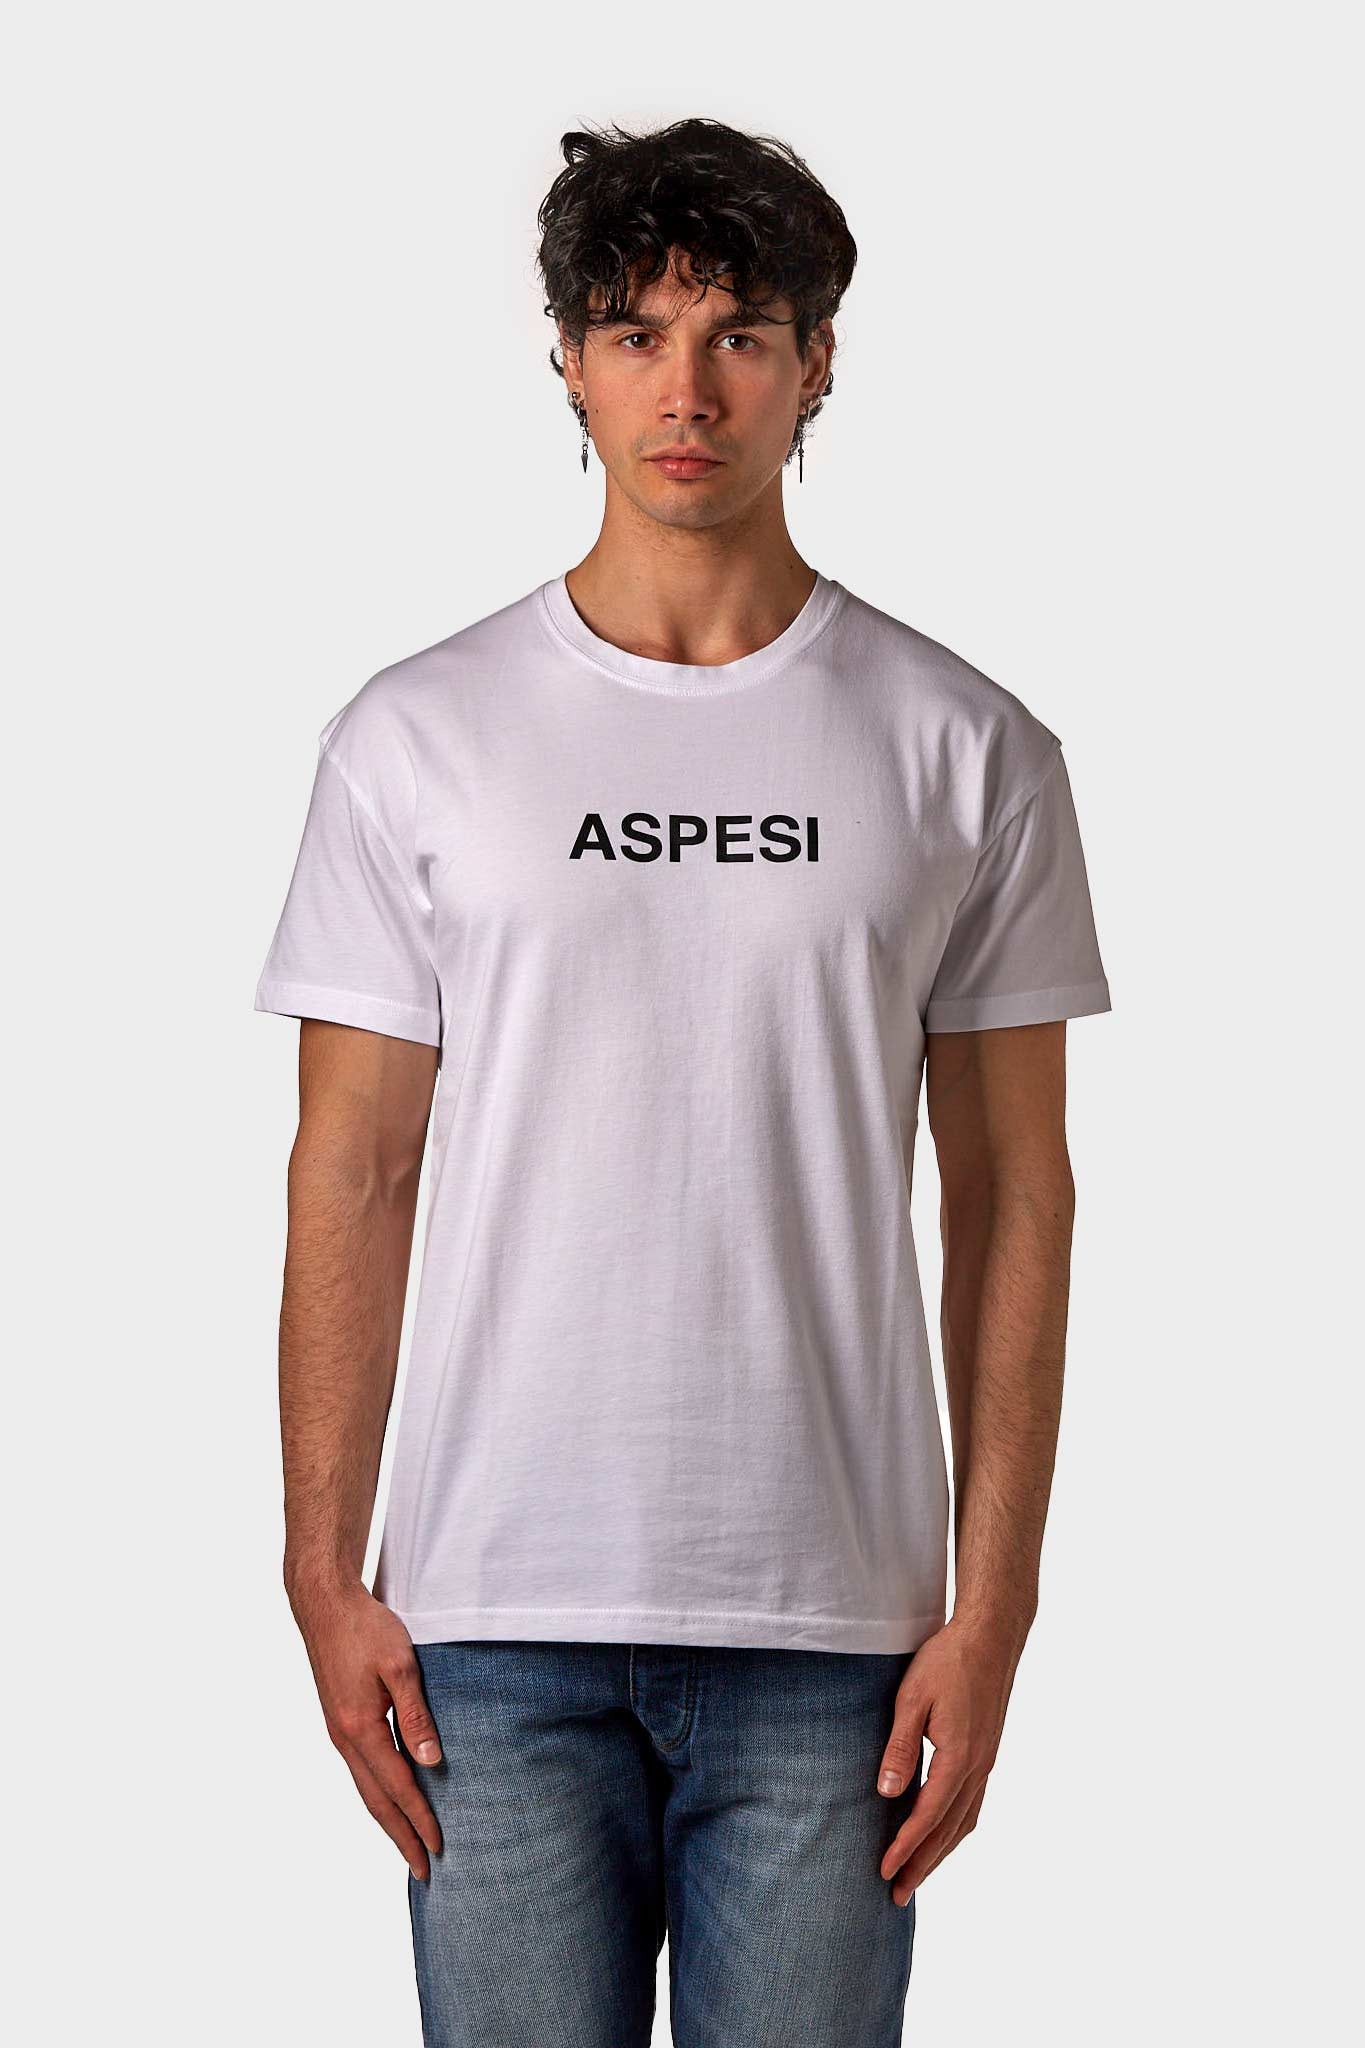 ASPESI T-SHIRT ASP1MTS02 BIANCO UOMO